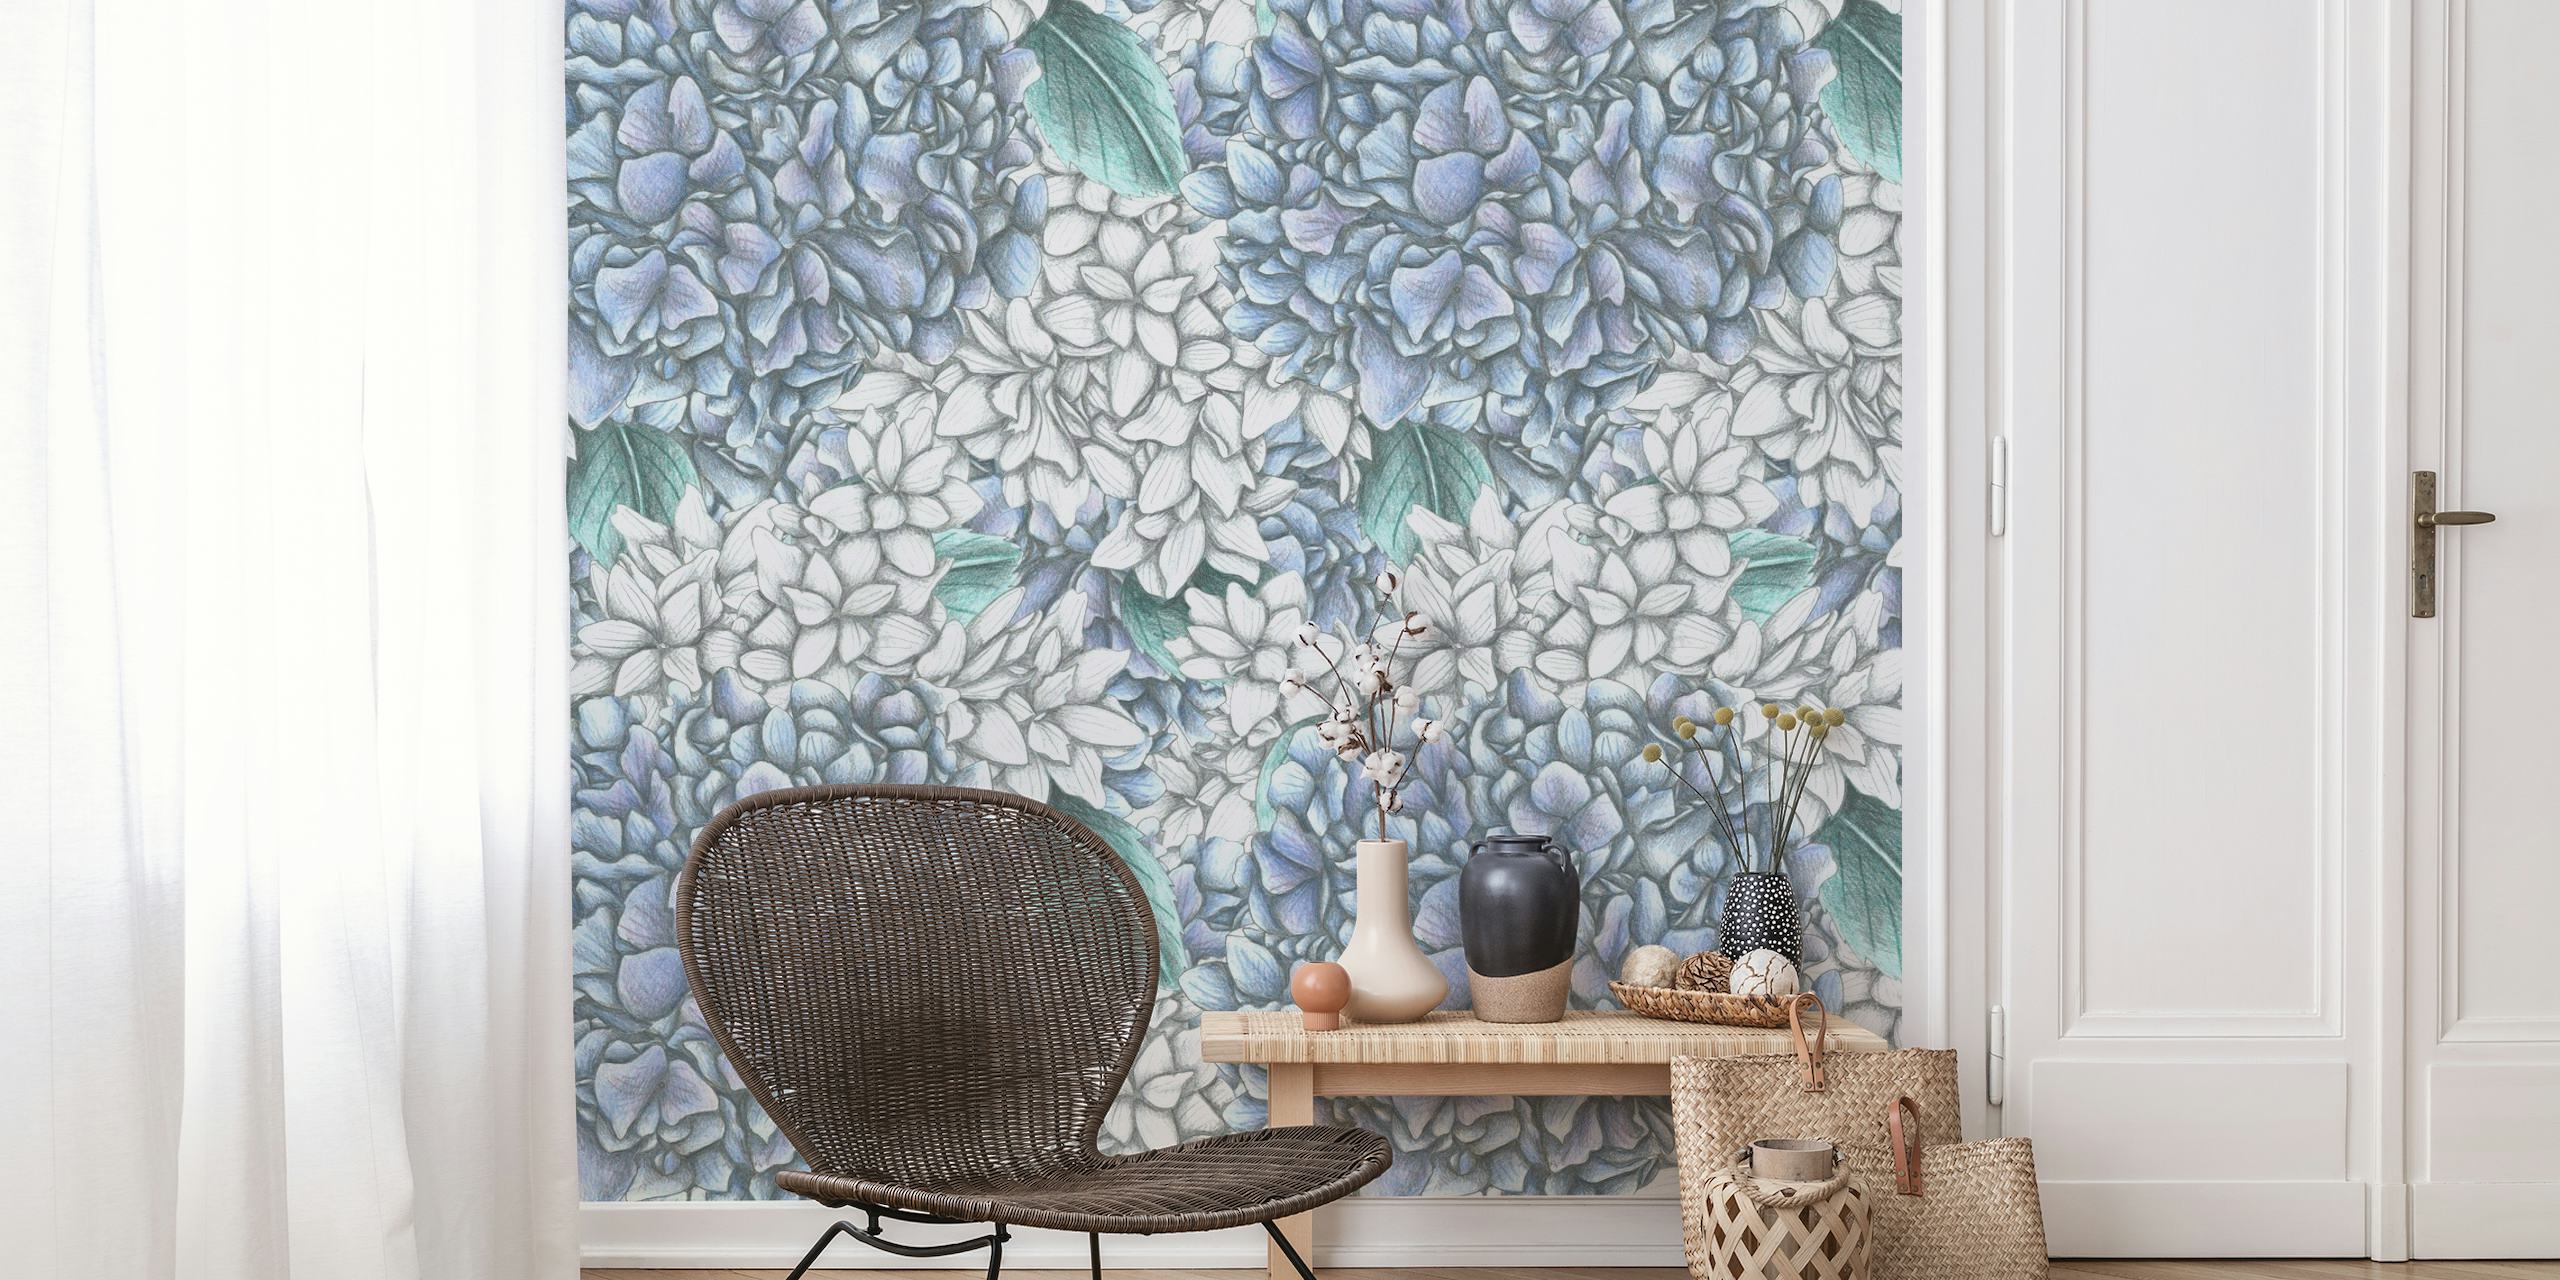 Cushions of Hydrangeas wallpaper